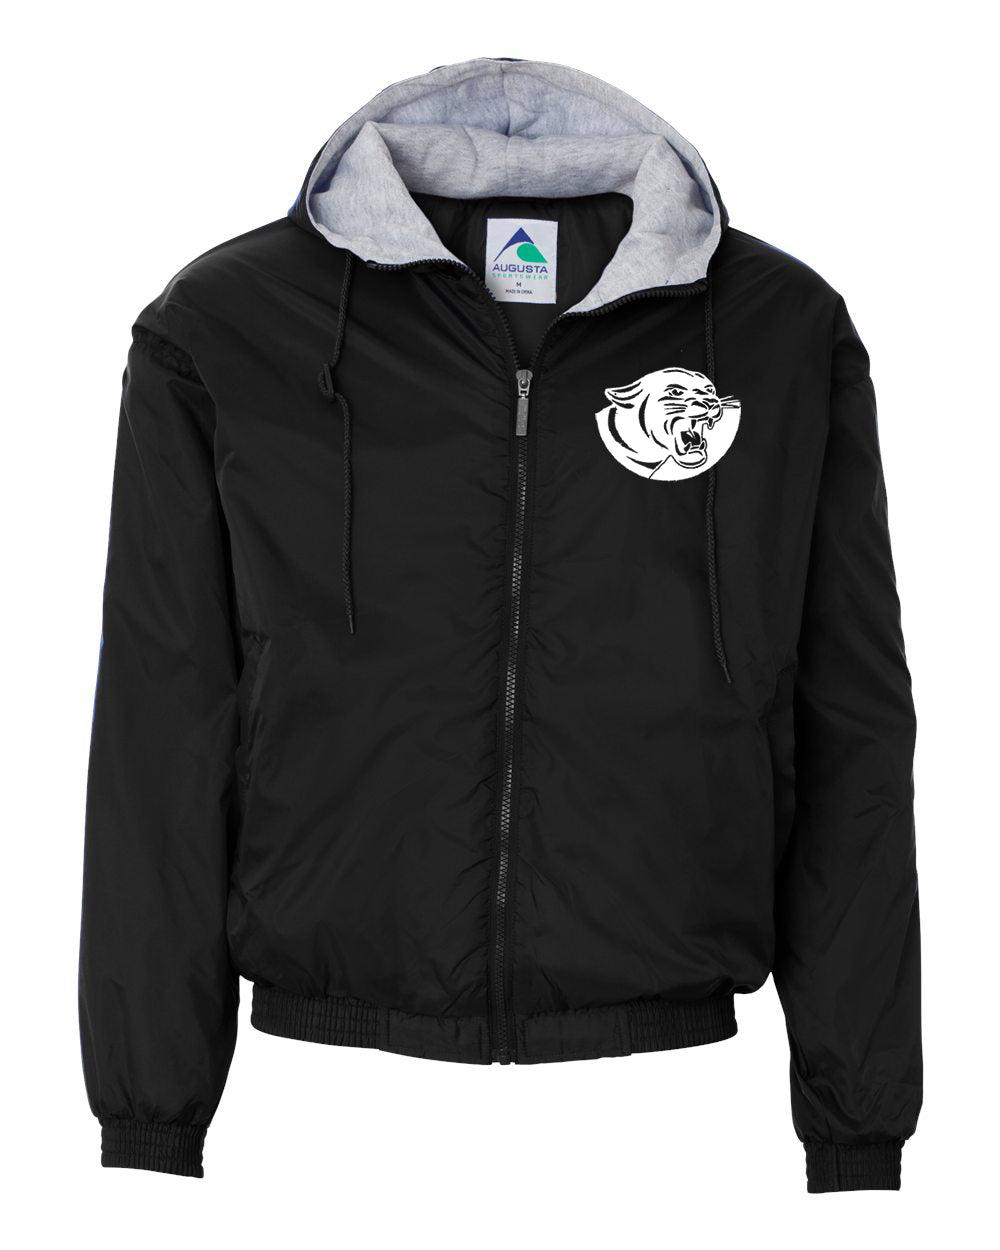 ANDOVER Augusta Sportswear® Hooded Taffeta Jacket Fleece Lined